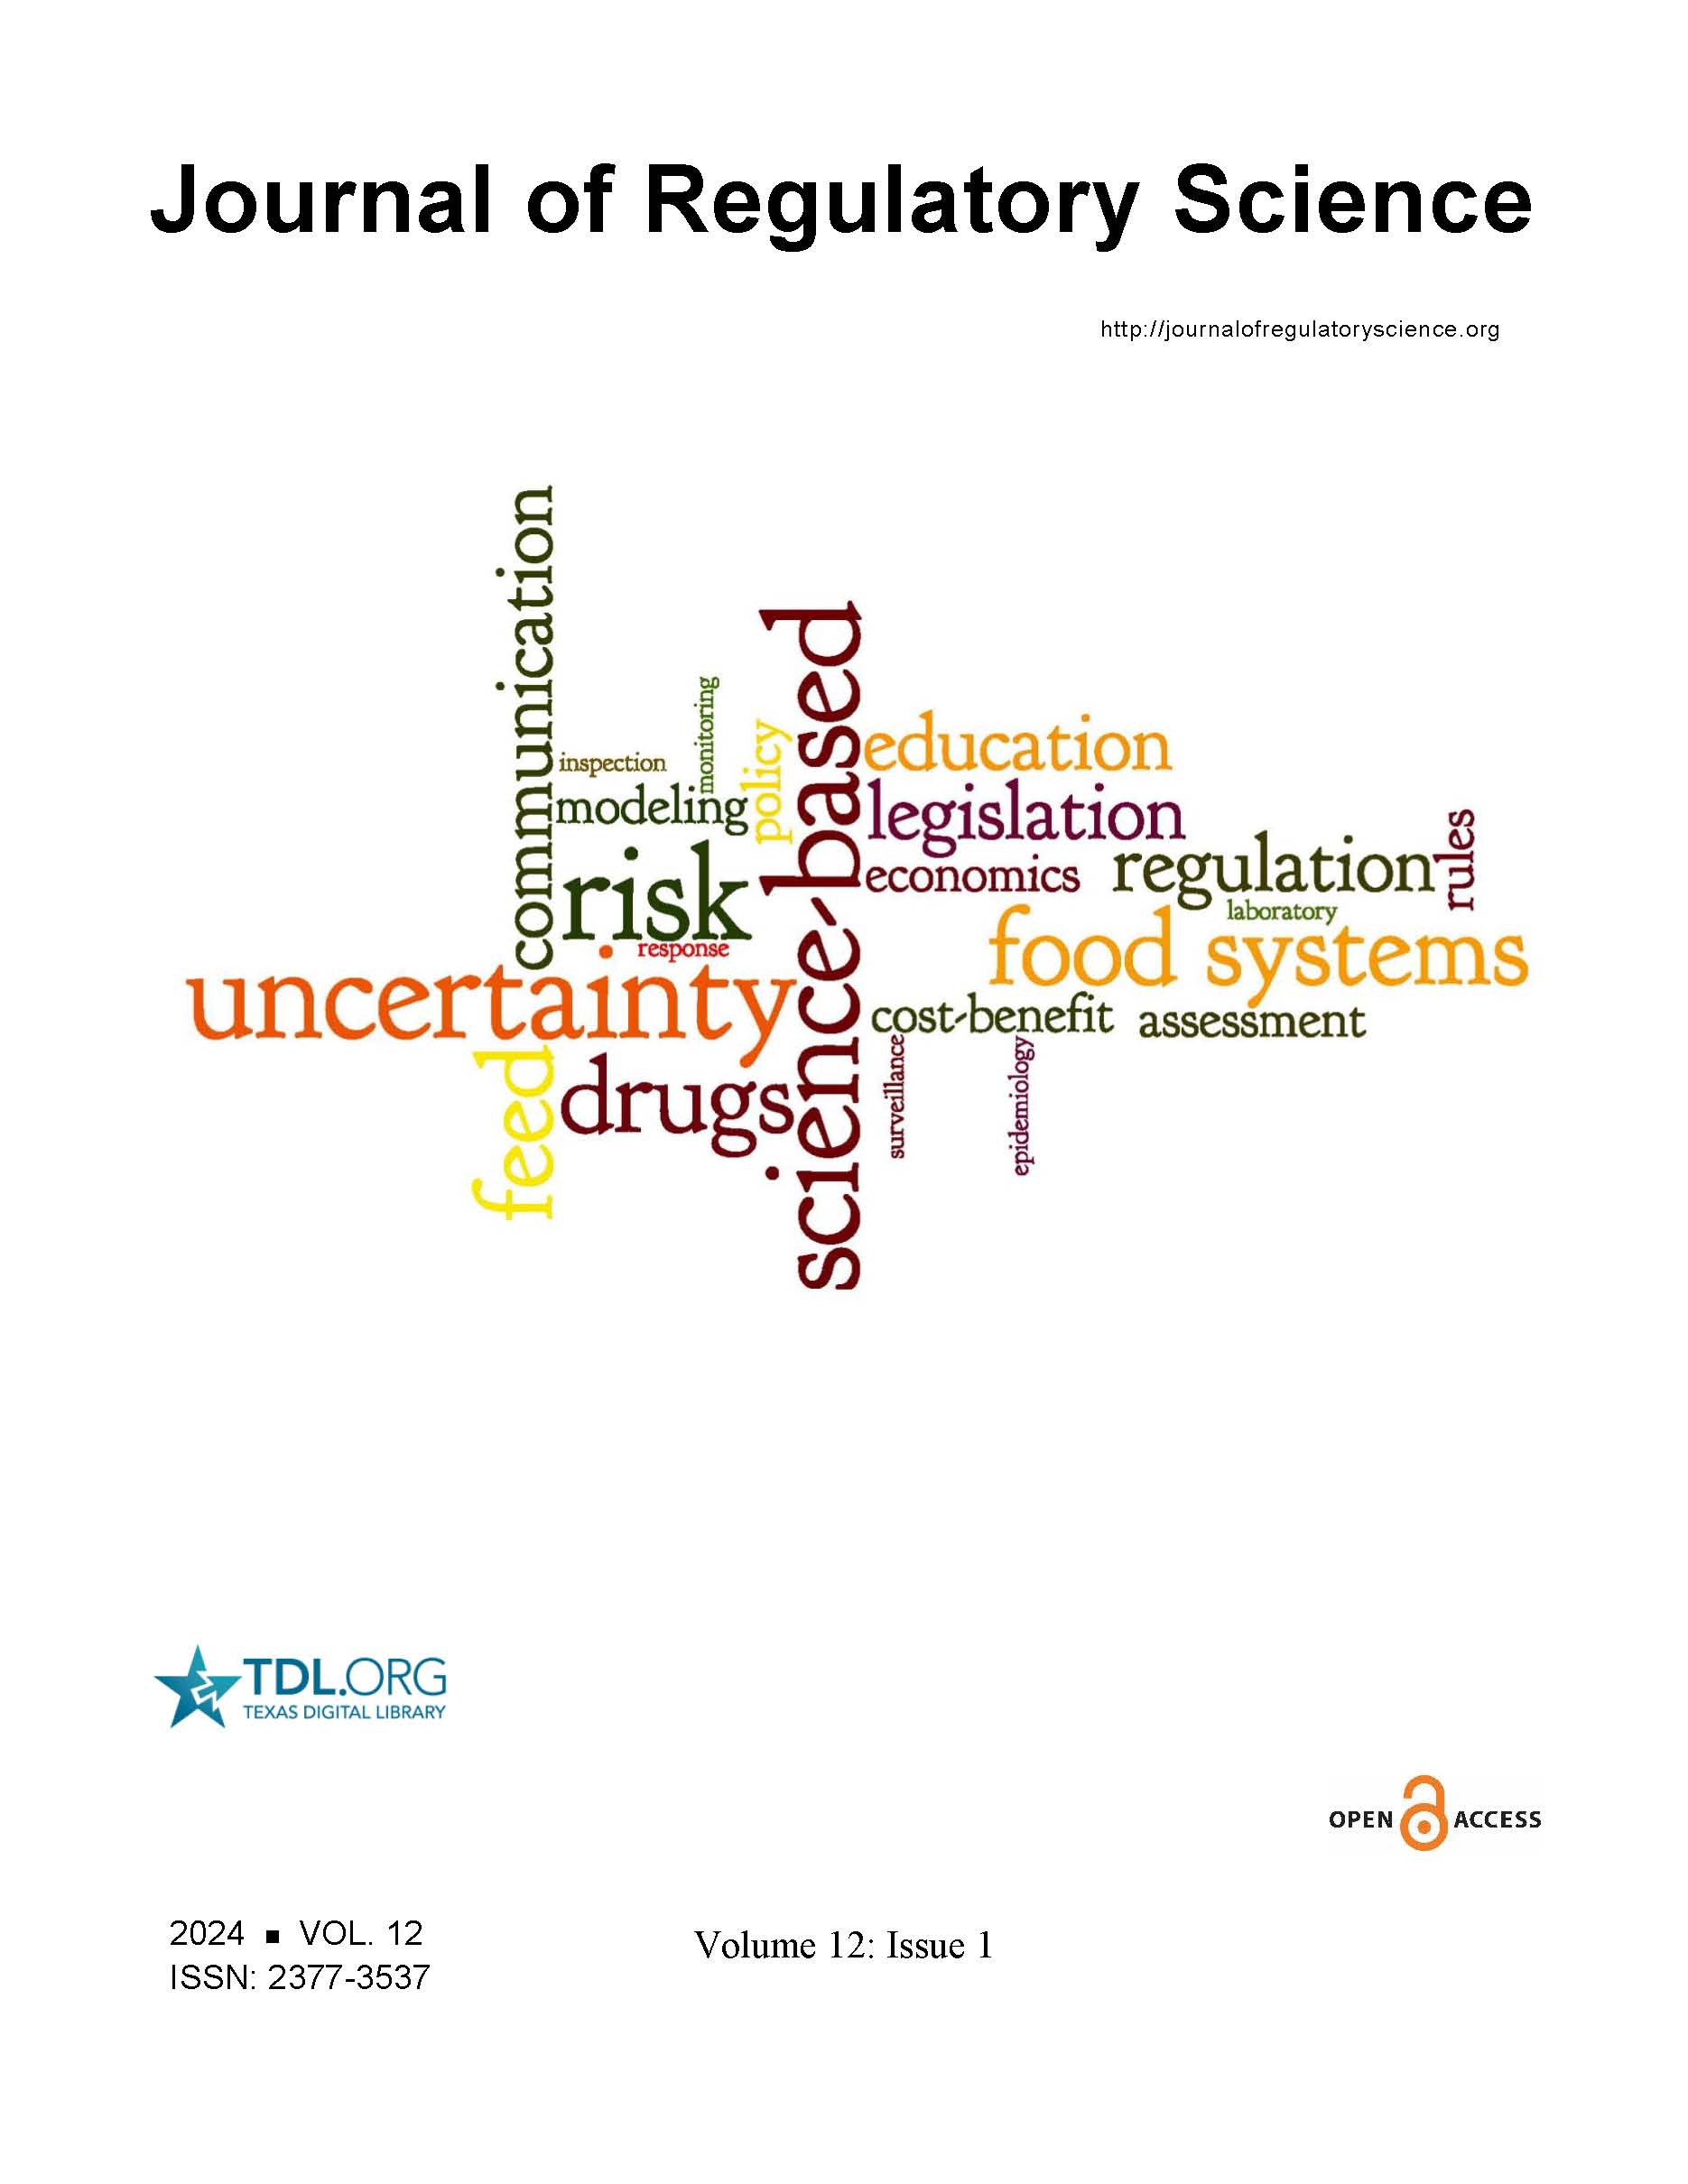 Journal of Regulatory Science - Volume 12 Issue 1